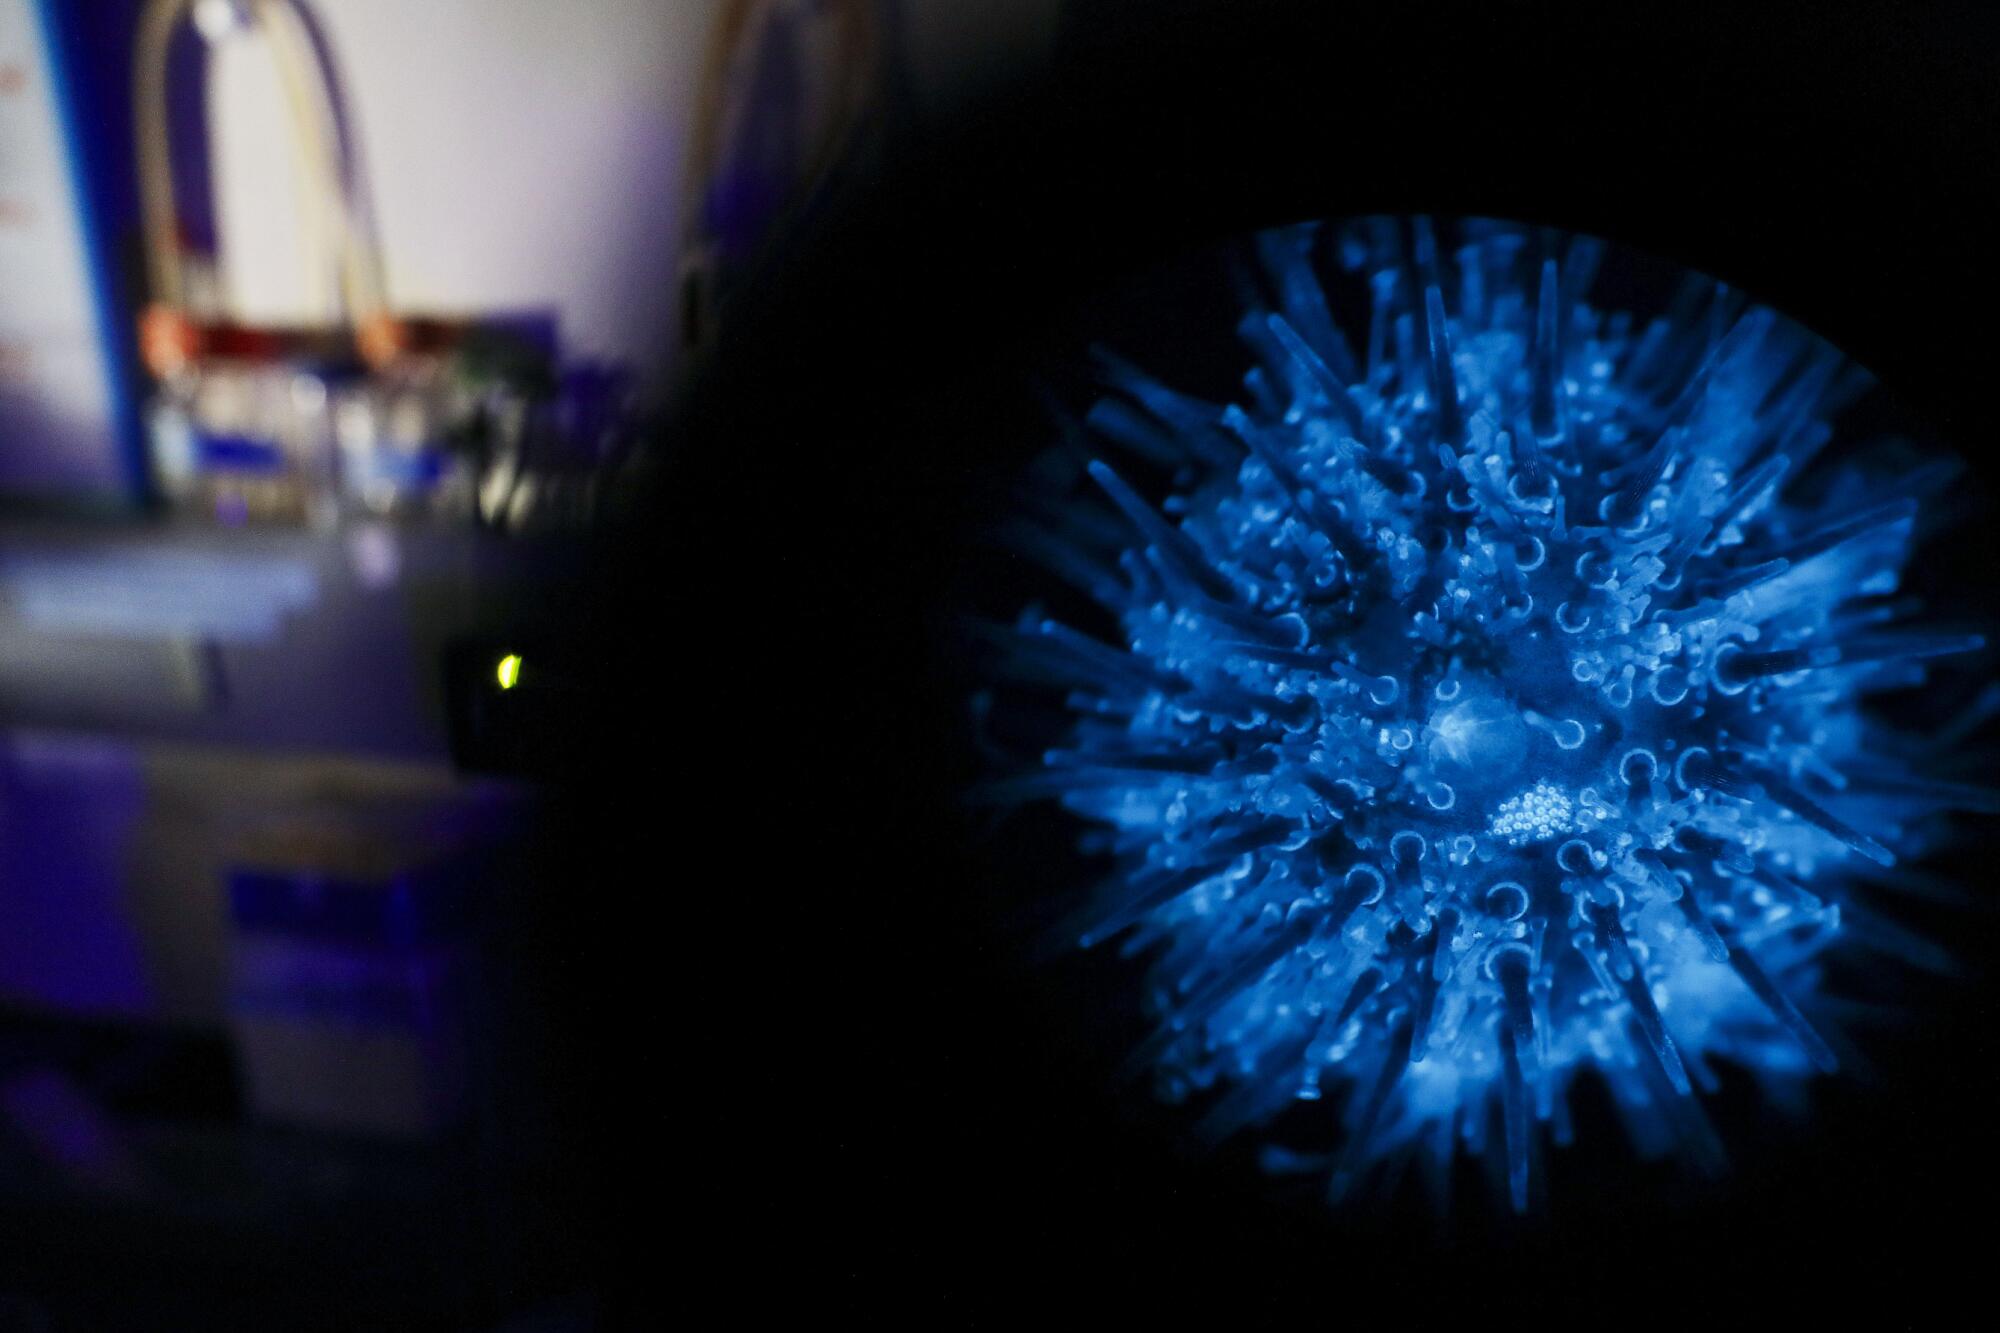 A fluorescent blue transgenic sea urchin is seen through a microscope